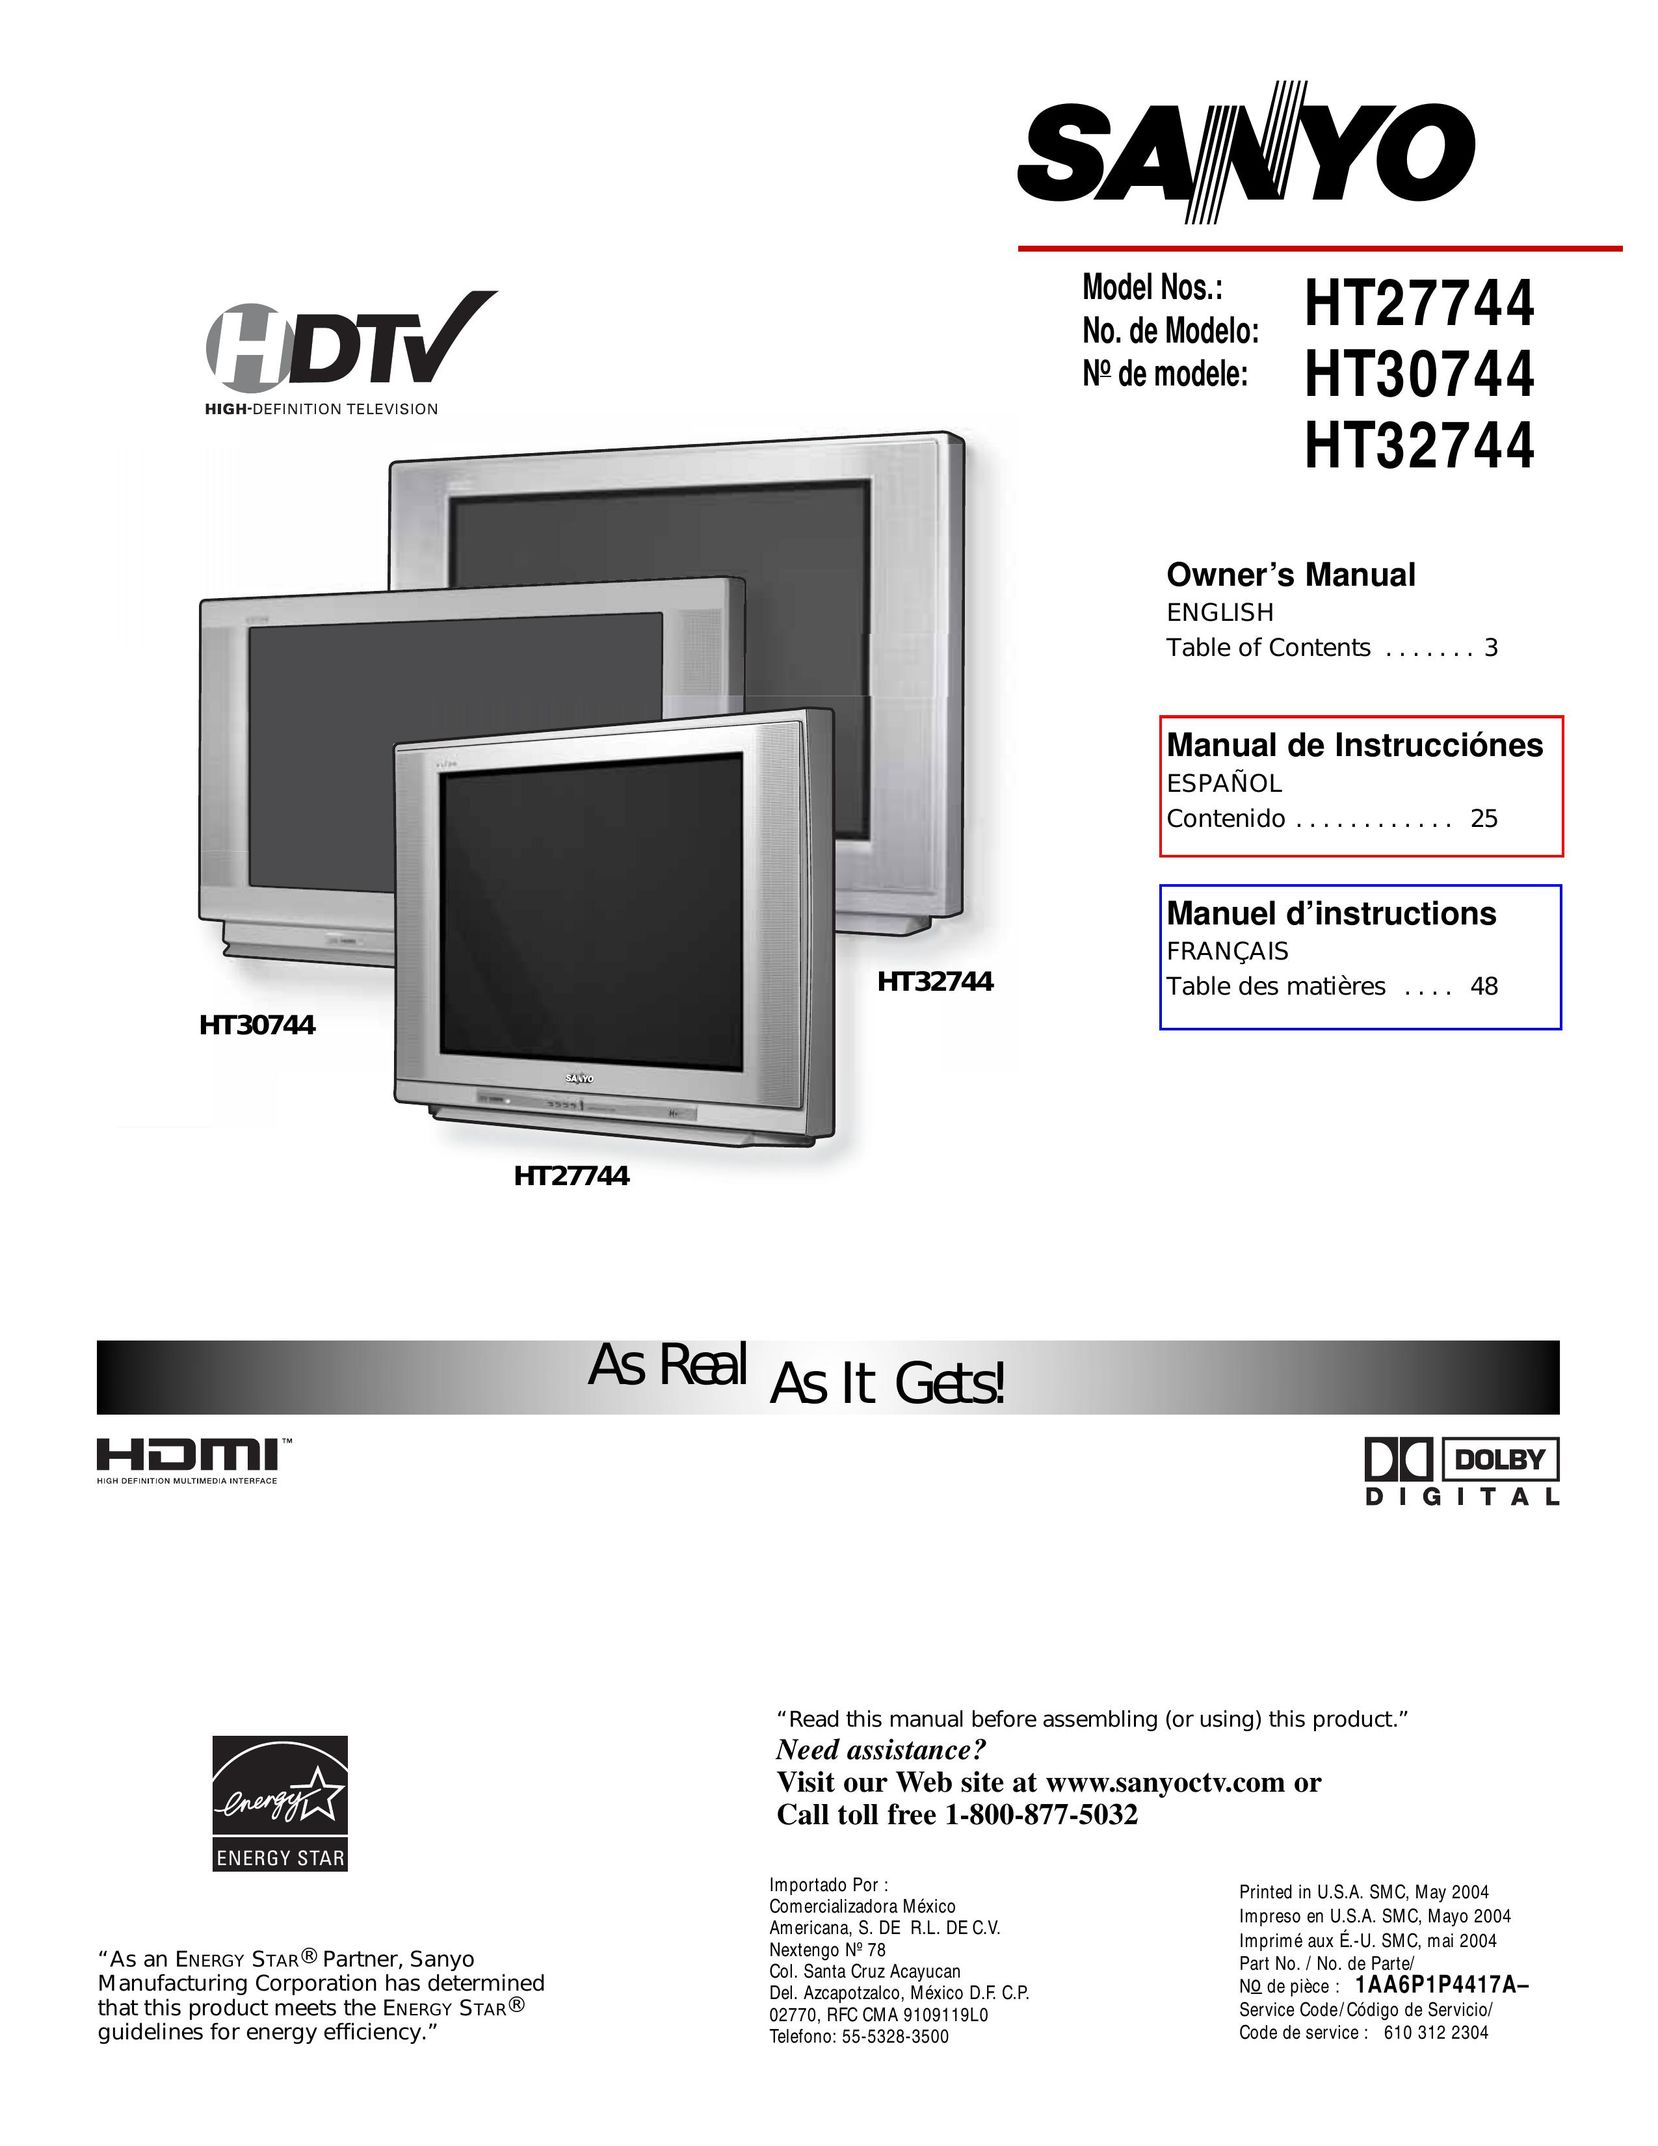 Sanyo HT30744 TV Receiver User Manual